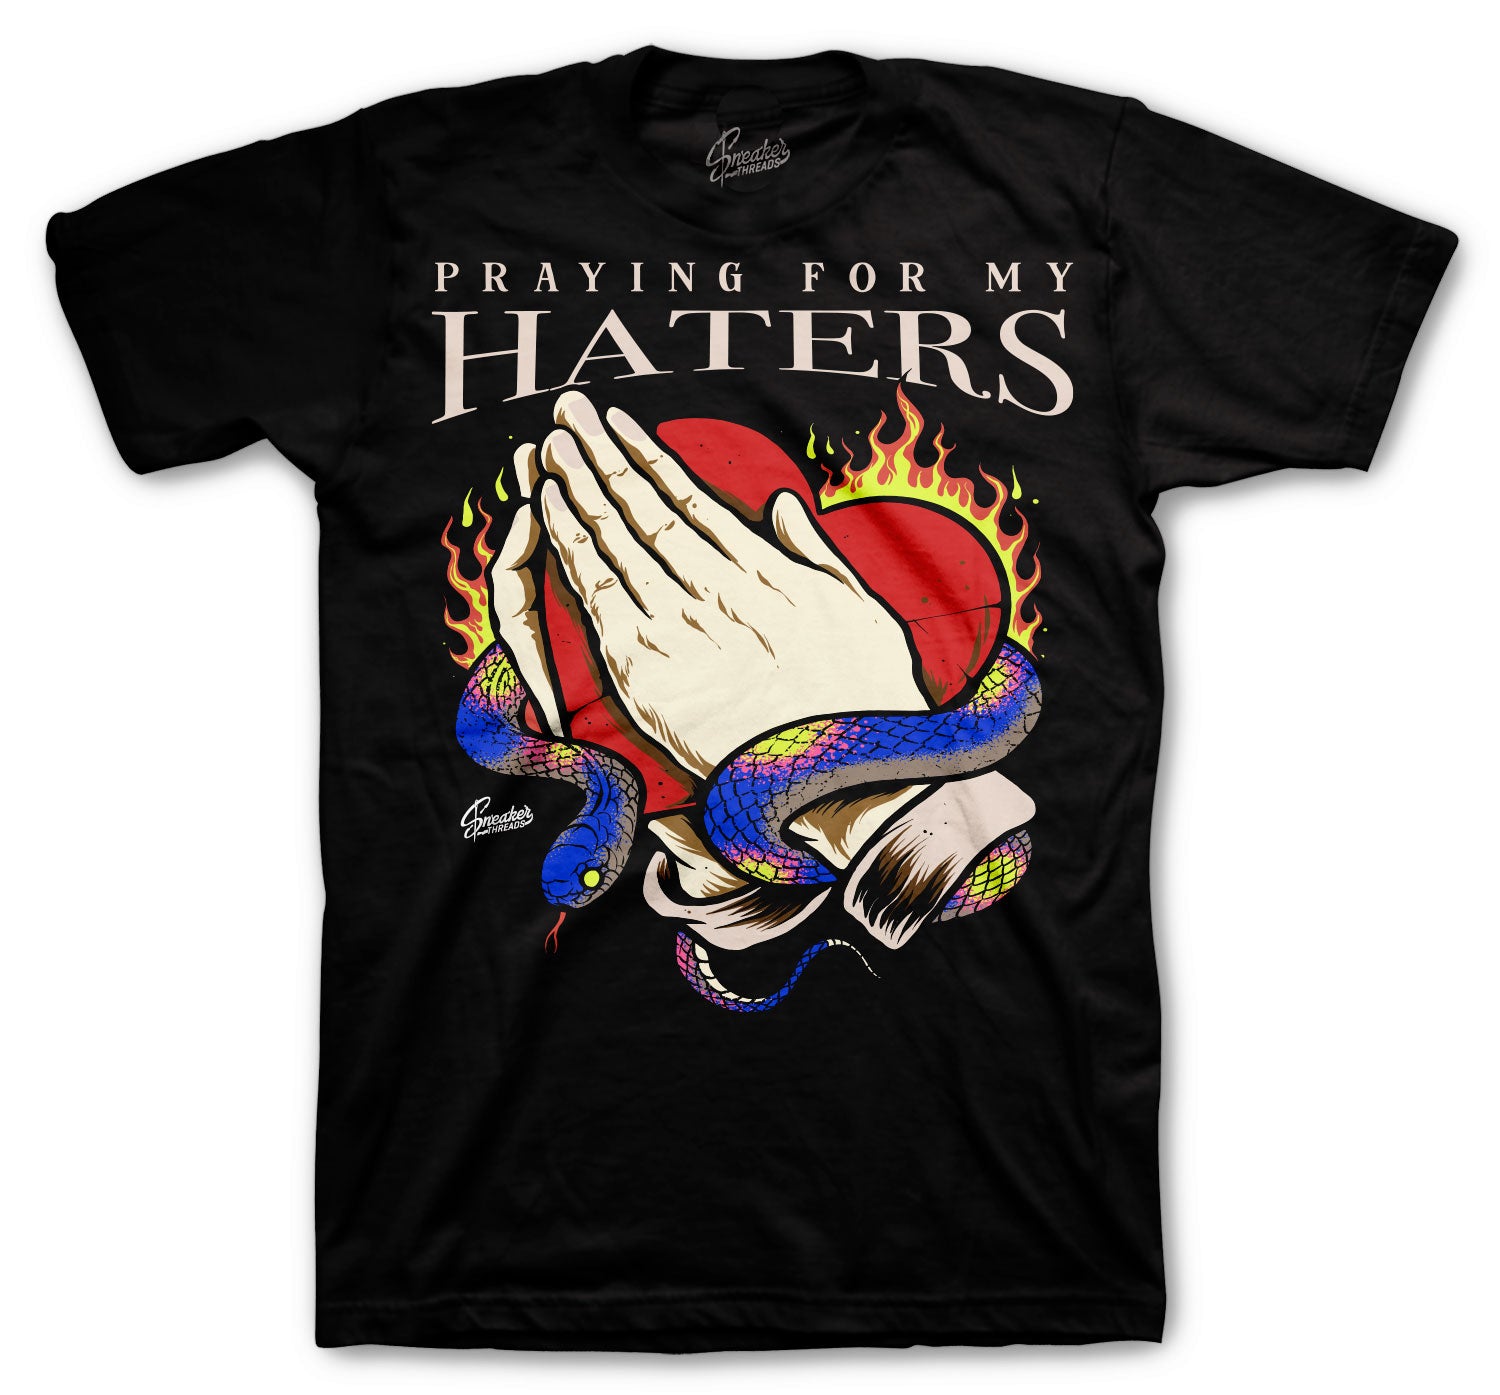 Retro 4 Wild Things Shirt - Praying For Haters - Black